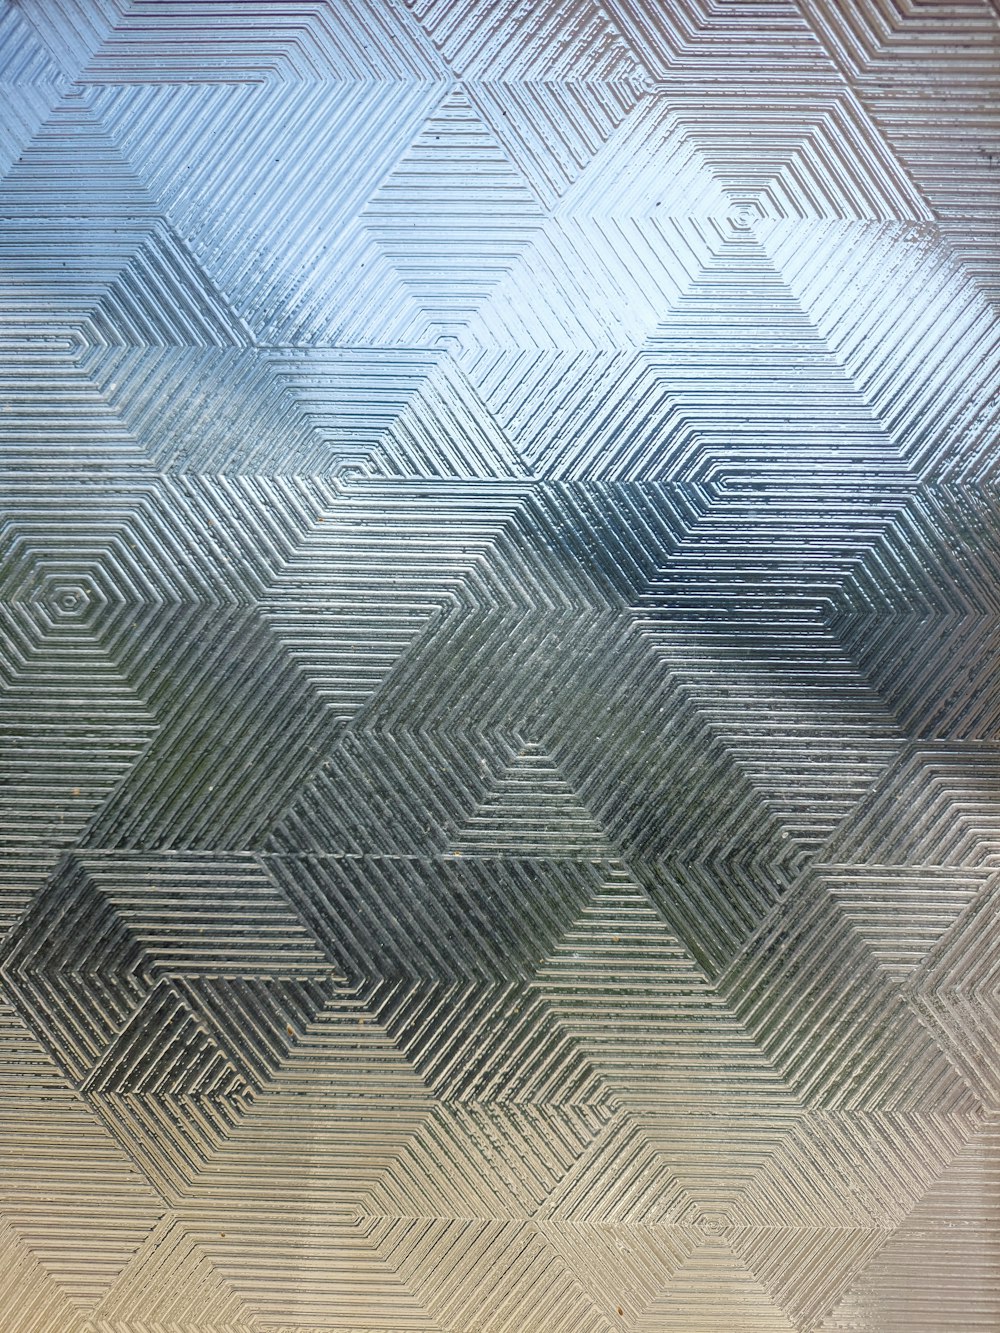 a blurry image of a diamond pattern on a window